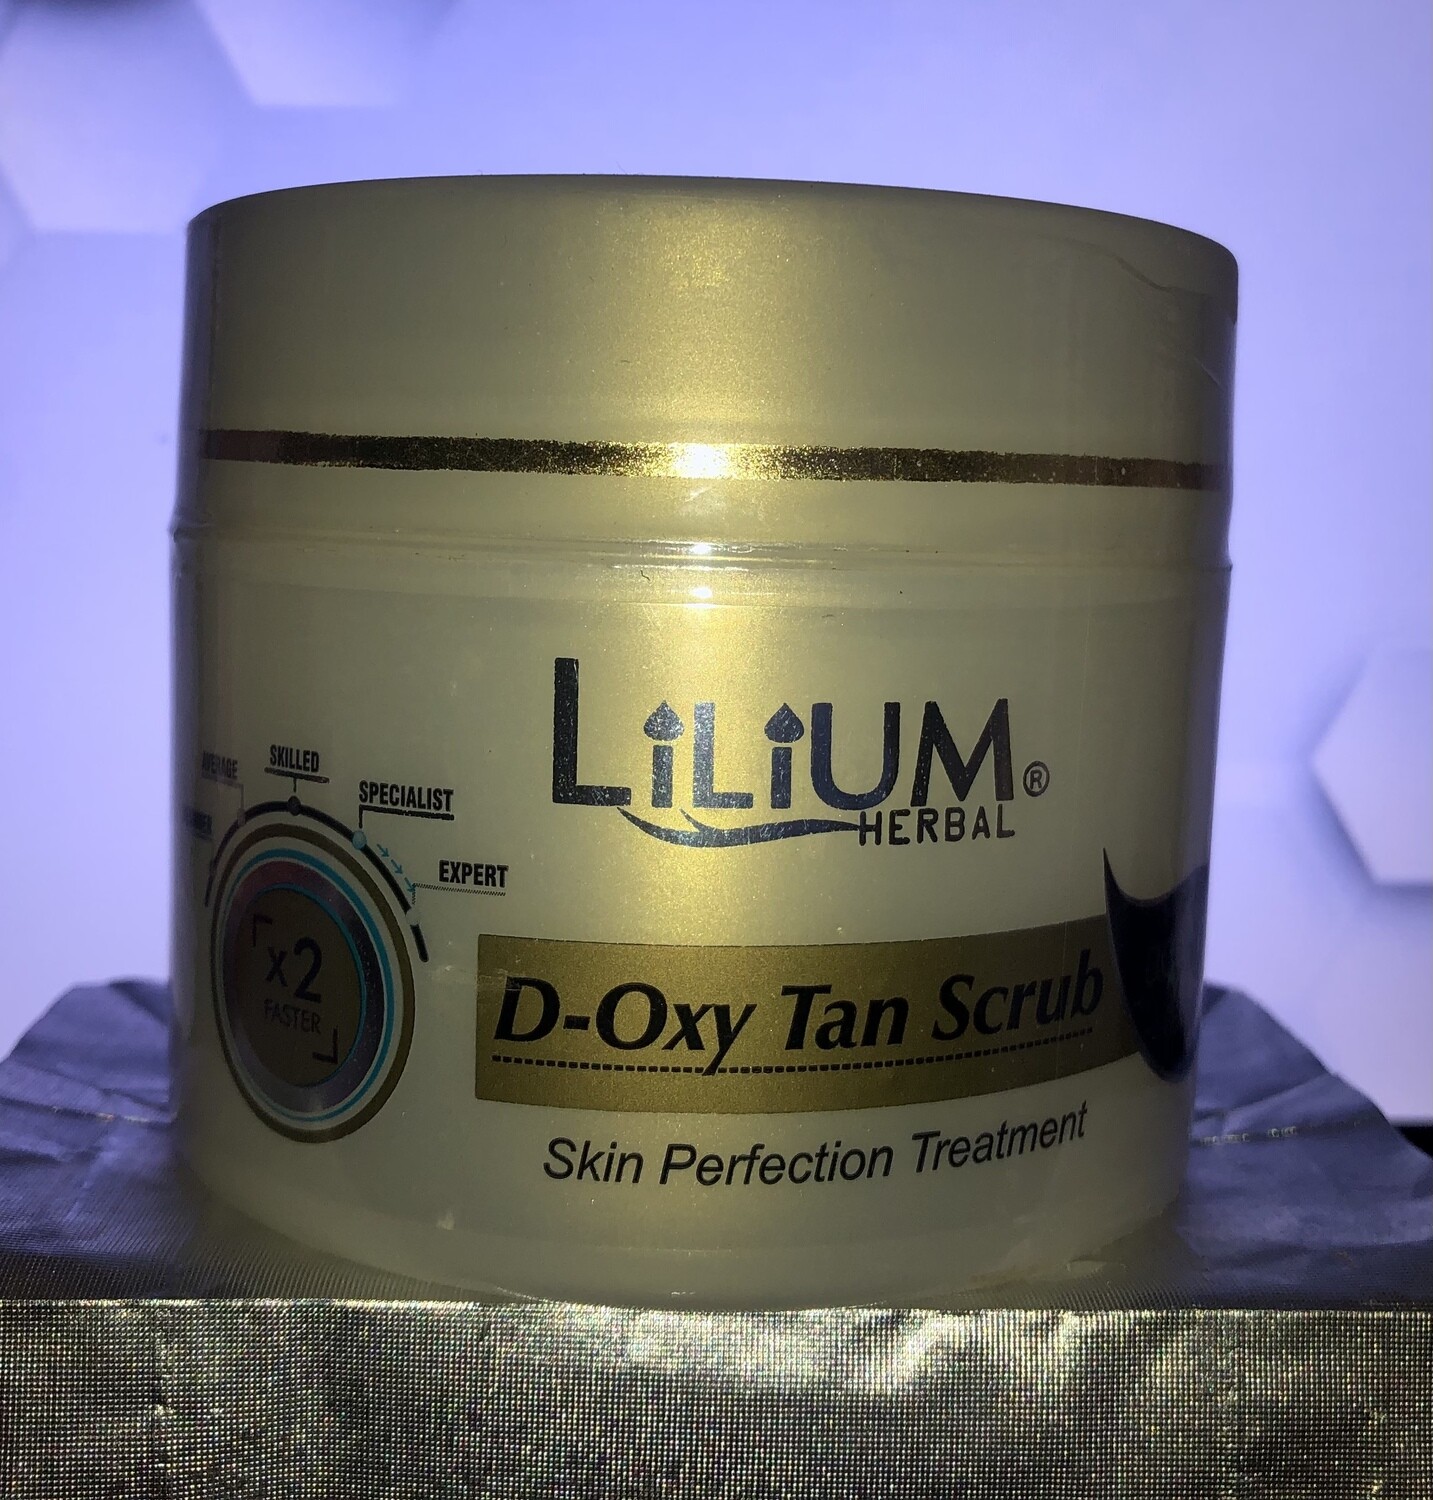 LiLiUM Herbal D-Oxy Tan Scrub 275gm (Skin Perfection Treatment)